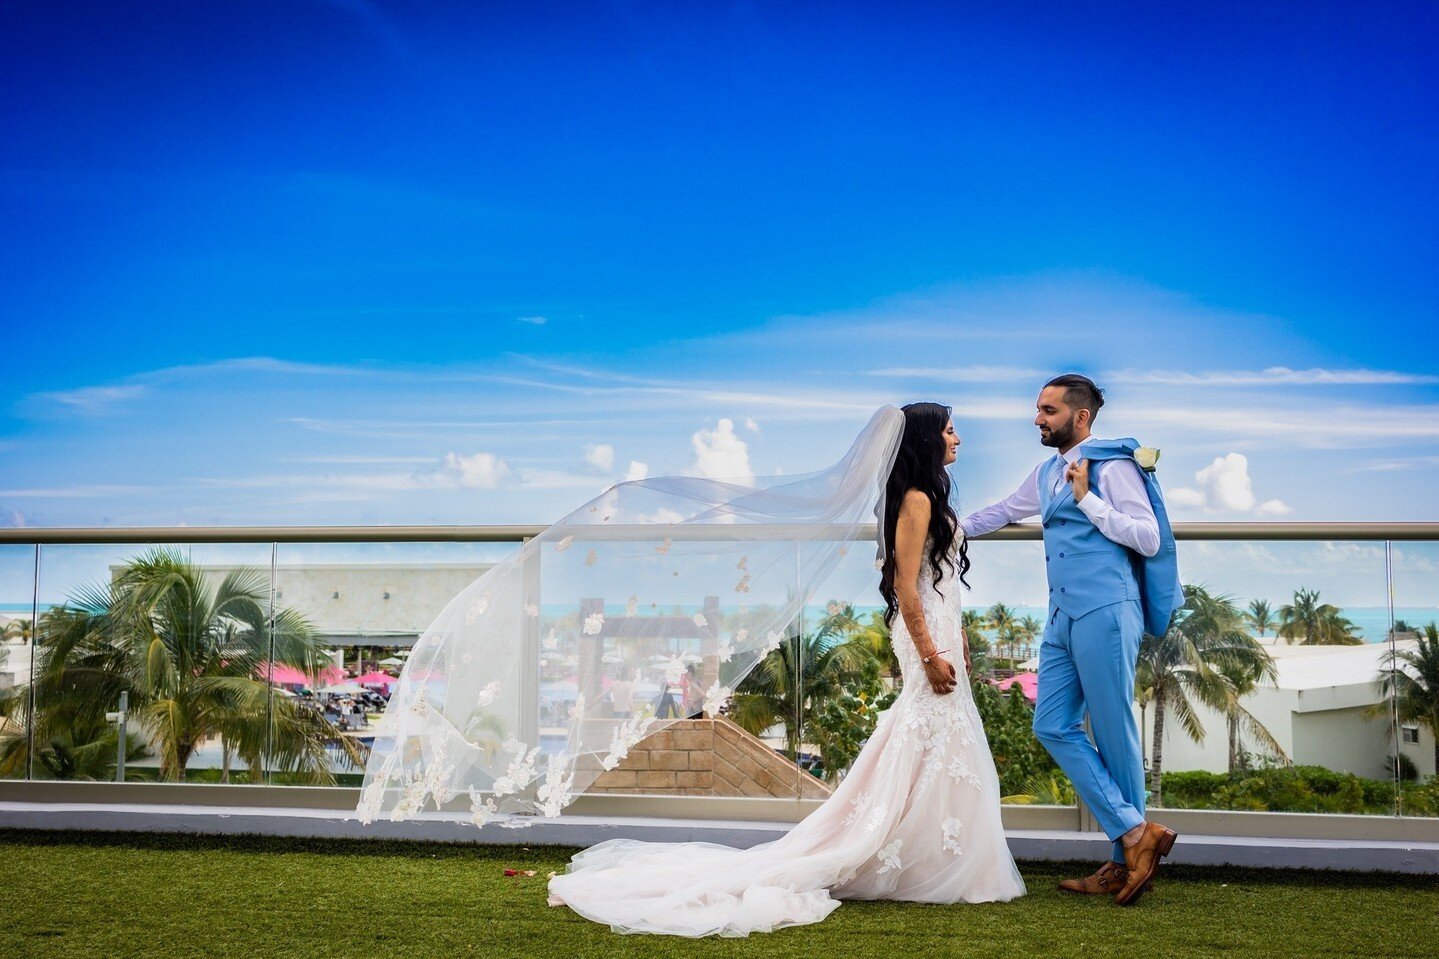 Those Cancun rooftop views as husband and wife though #PartnersinParadise⁠
🇲🇽 @shaadidestinations⁠
🧚 @idocelebrations⁠
📸 @mikecantarellfilms☝️⁠
📽️ @mikecantarellfilms⁠
💄 @farah_manekia_myfairbride⁠
🎪 @gamagroup⁠
🎧️ @djambition⁠
🖋️ @farah_man